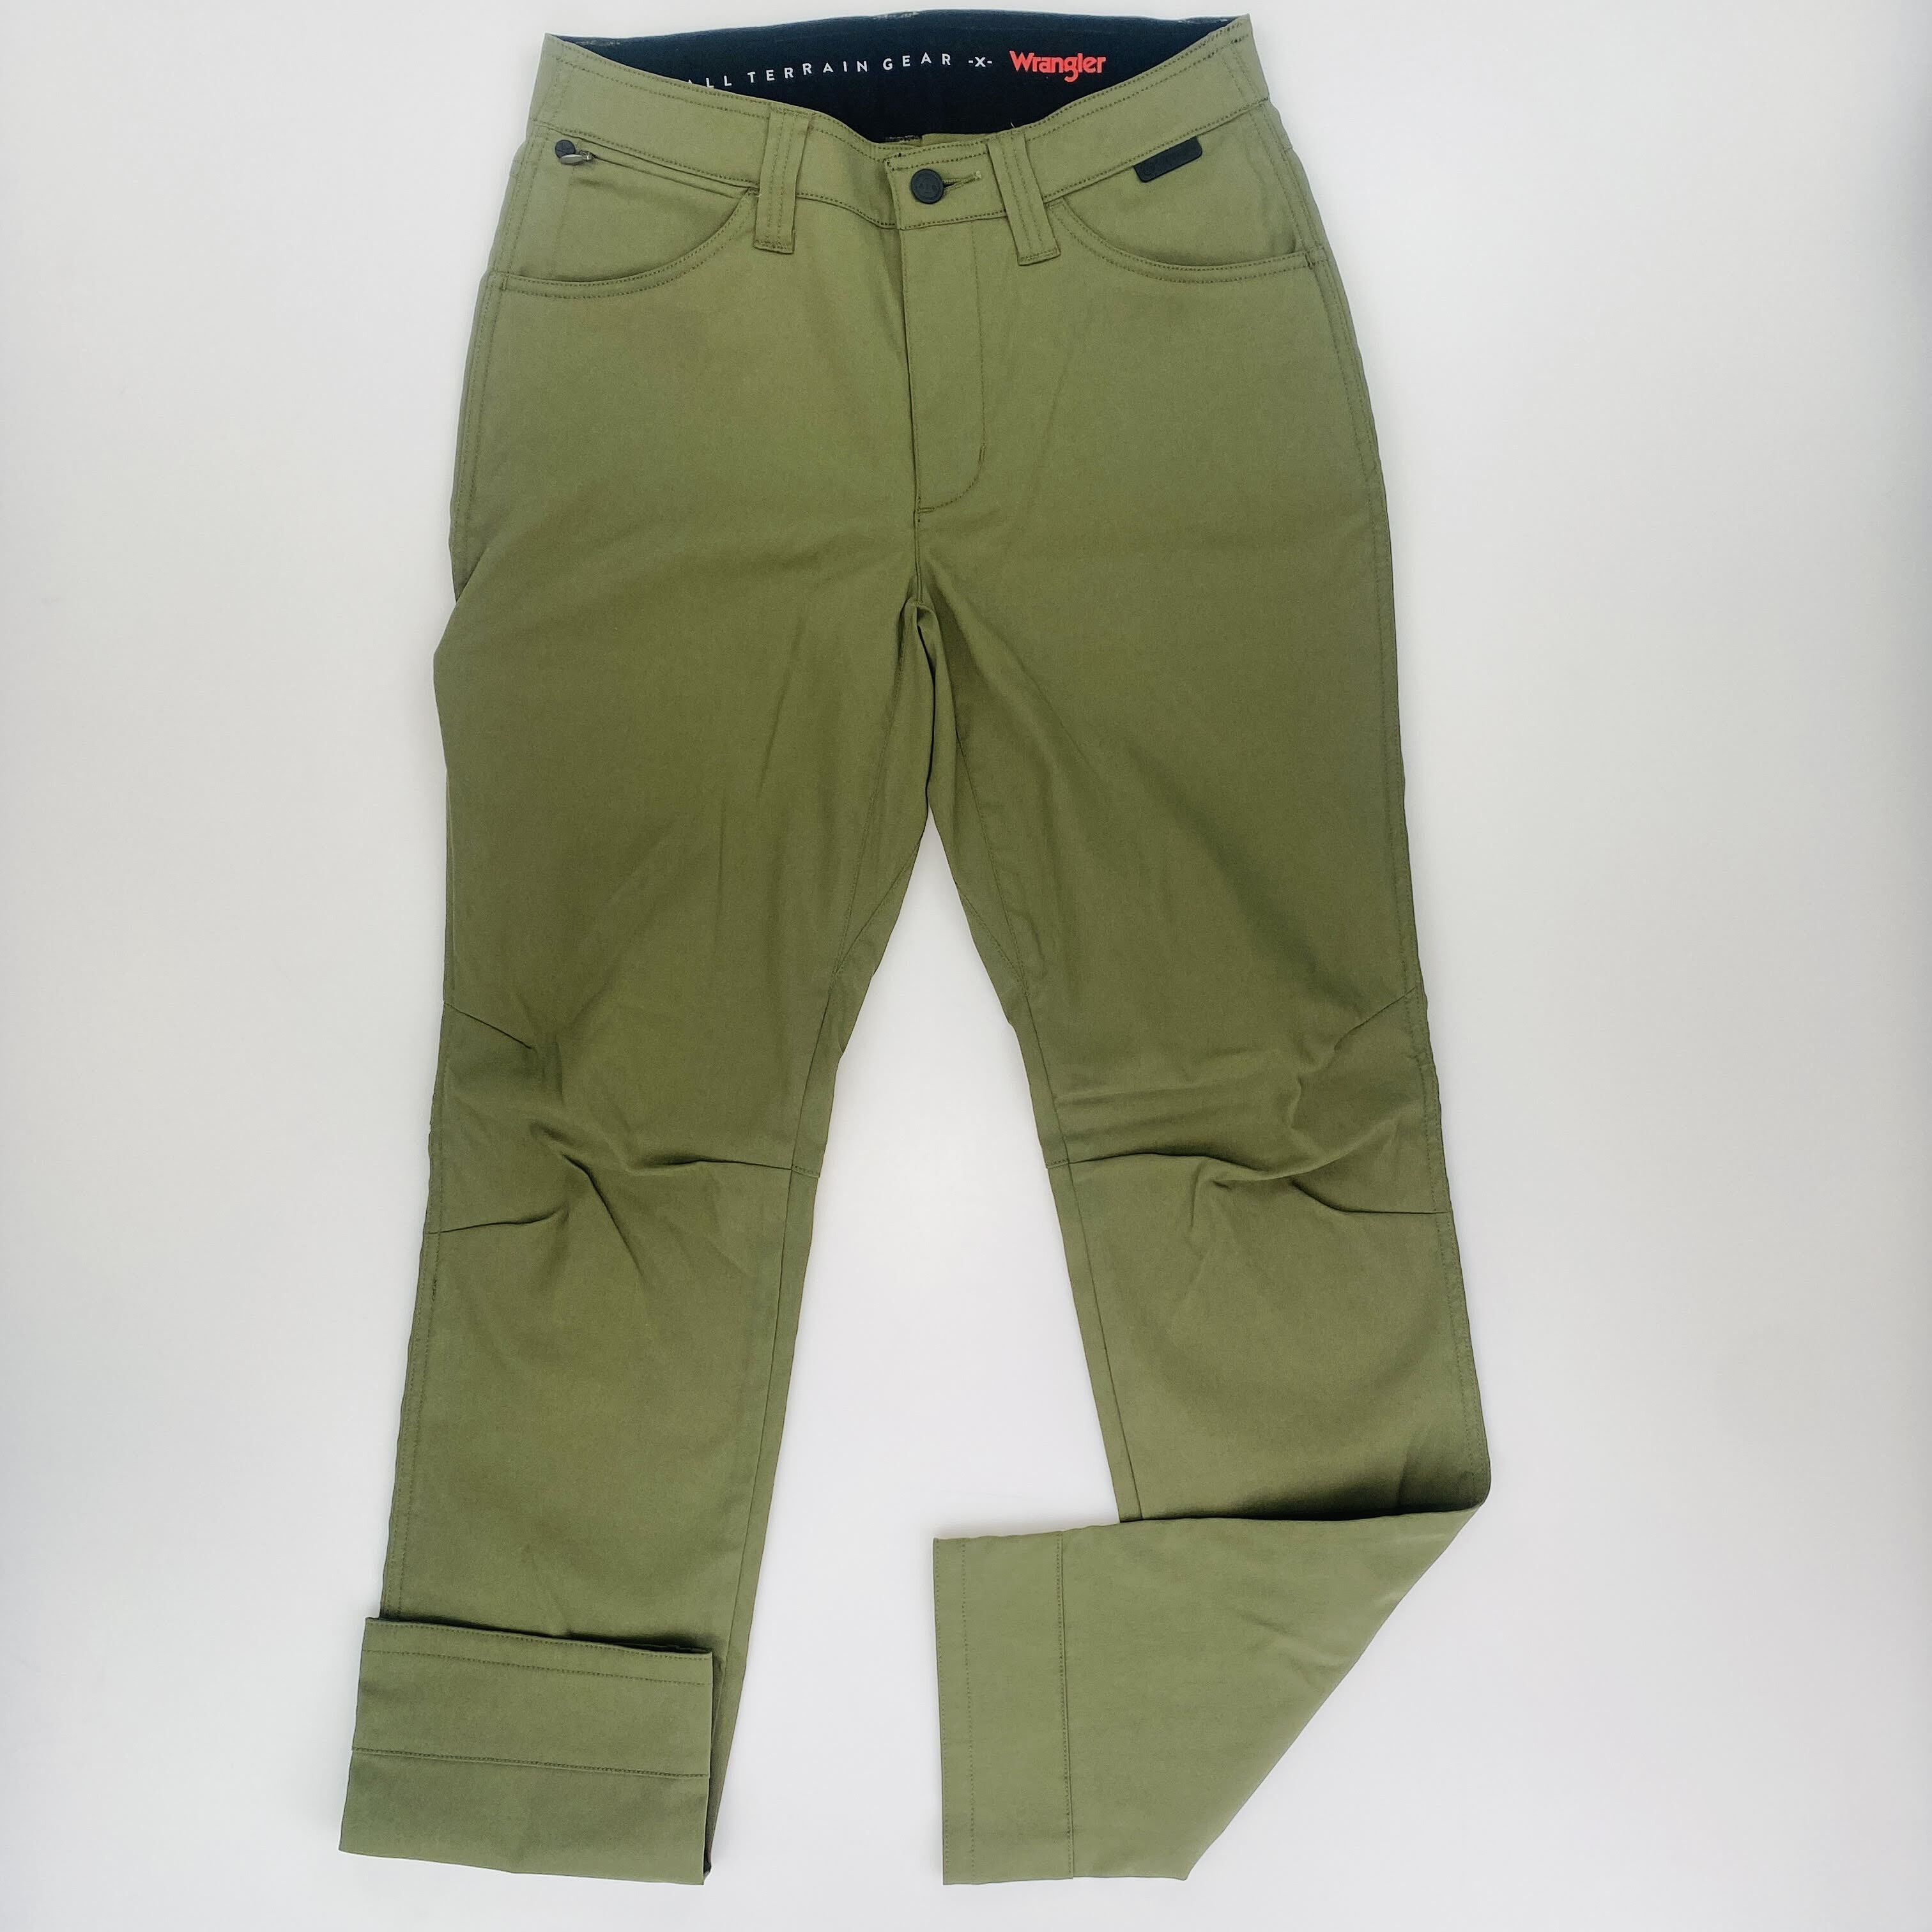 Wrangler Slim Utility Pants - Second Hand Walking trousers - Women's - Olive green - US 28 | Hardloop